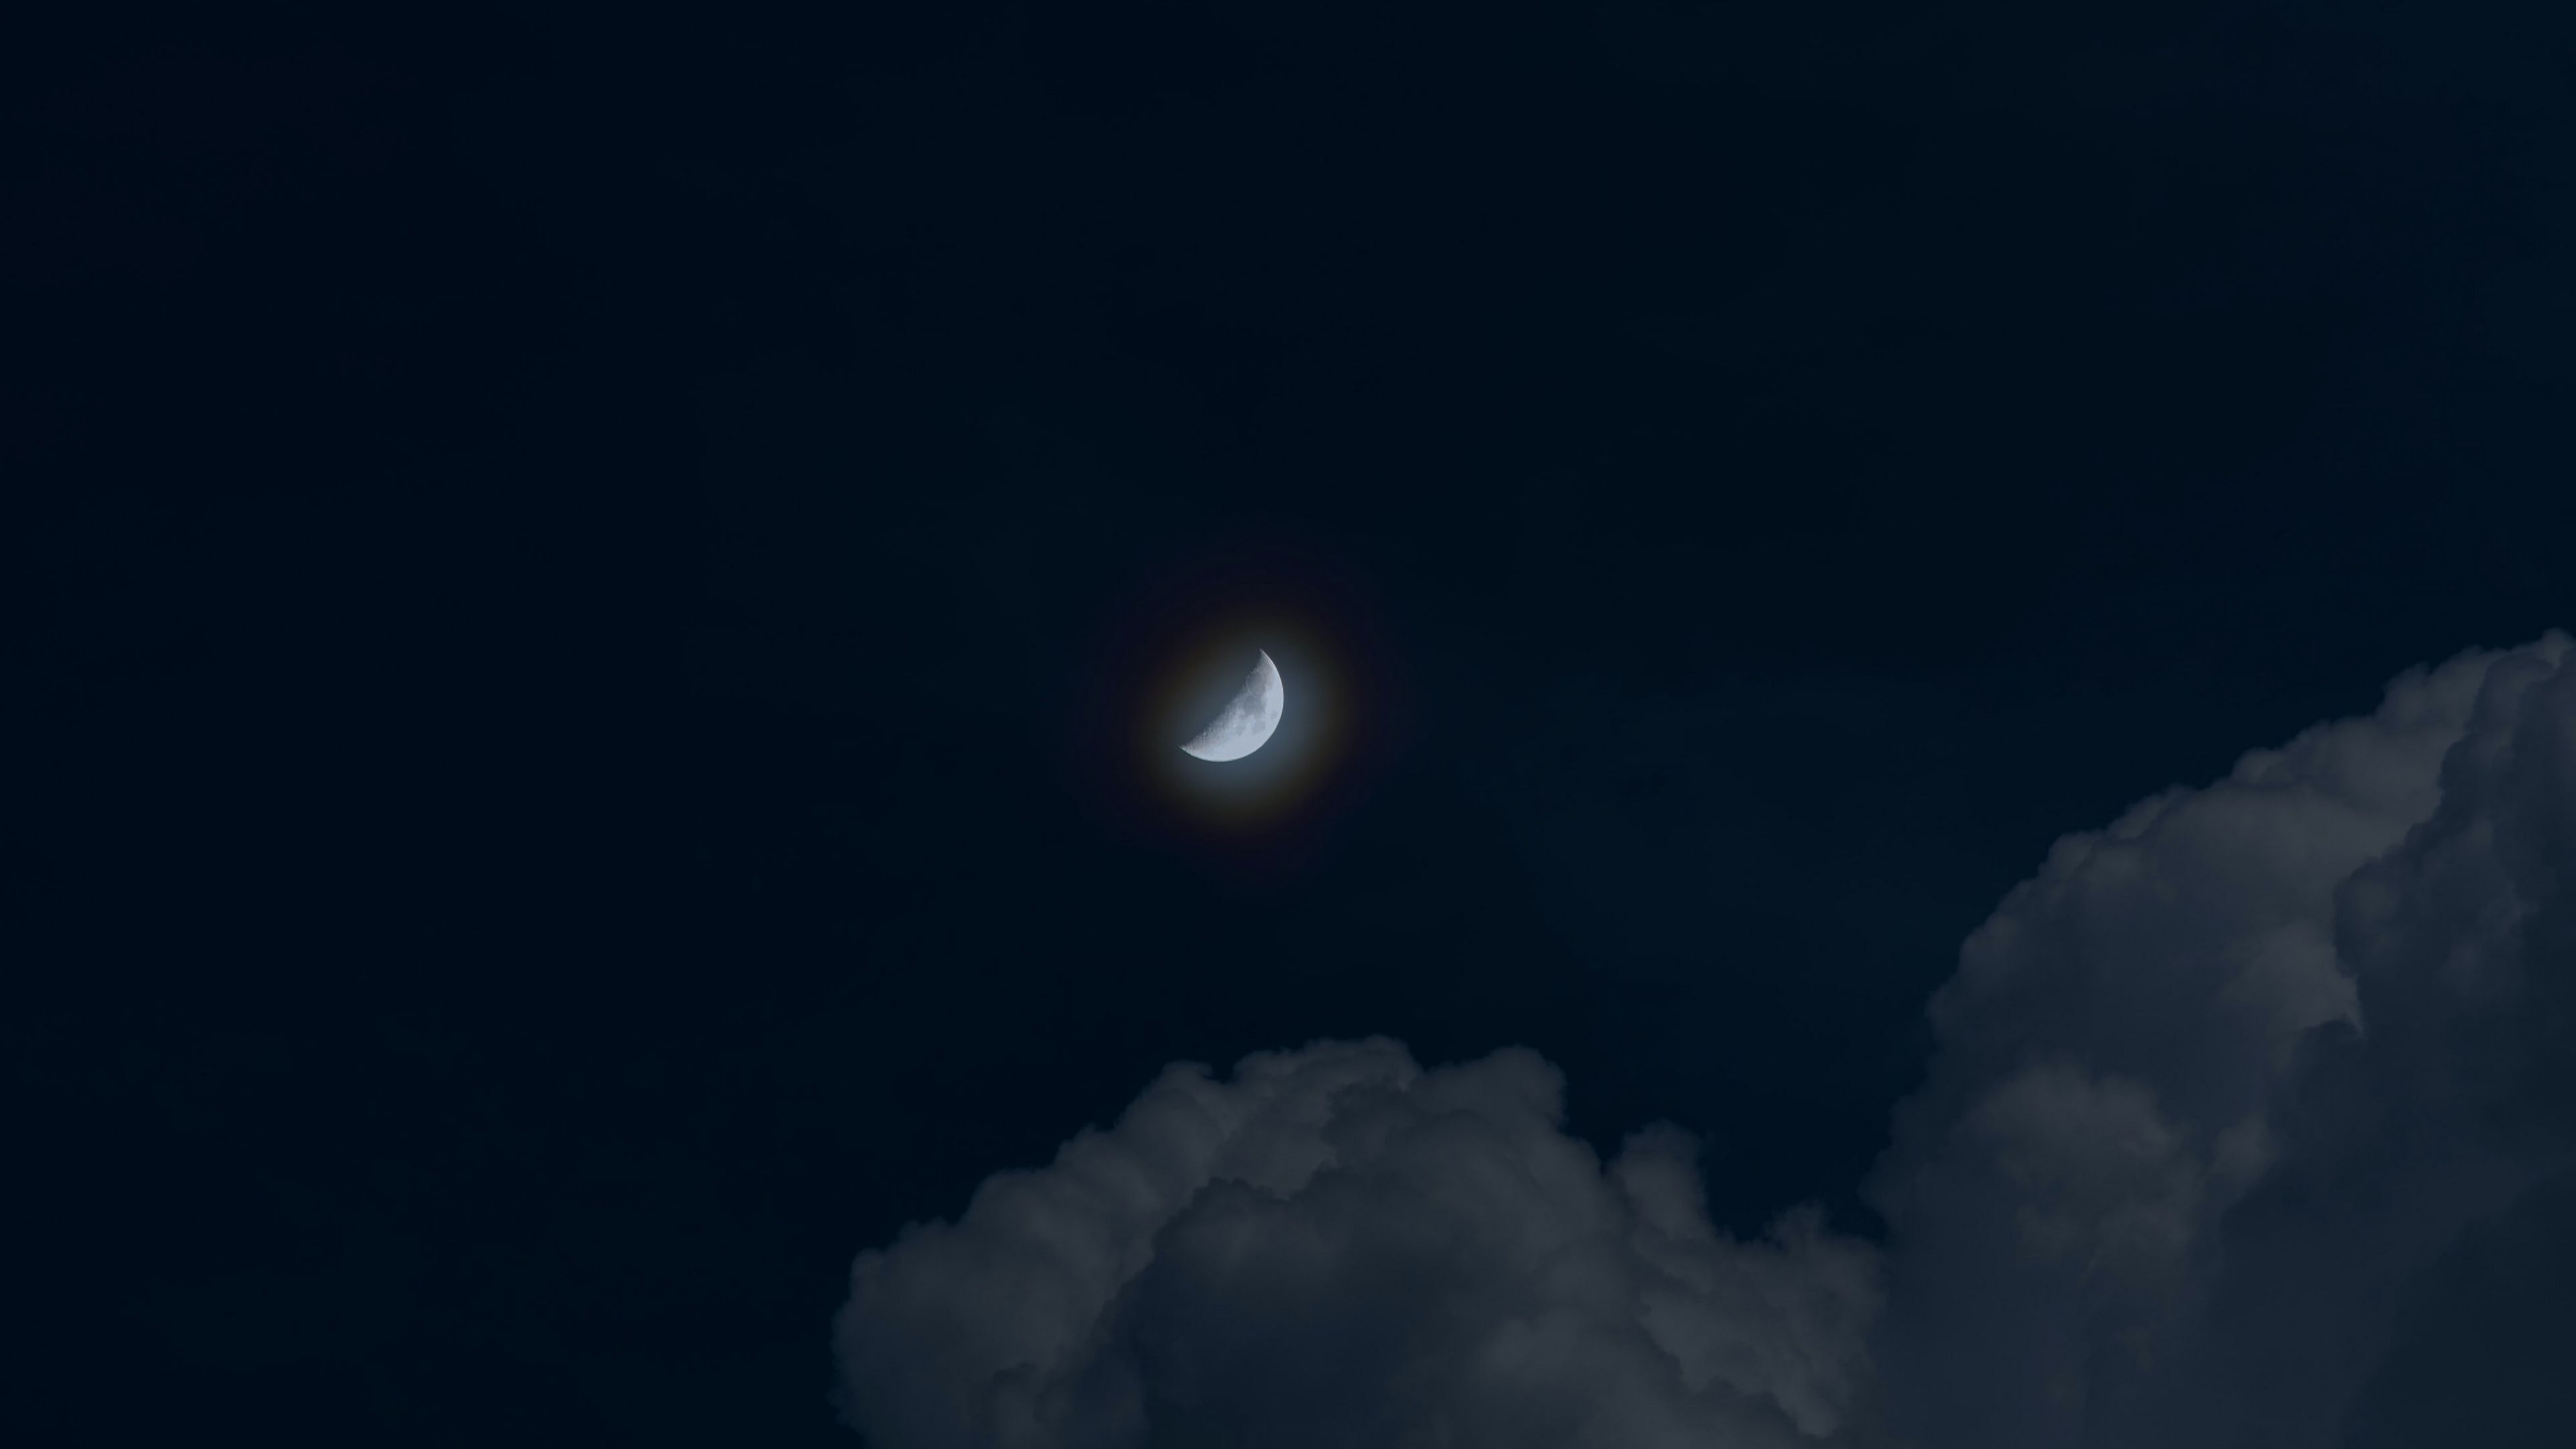 Download wallpaper 3840x2160 moon, night, clouds, sky 4k uhd 16:9 hd ...